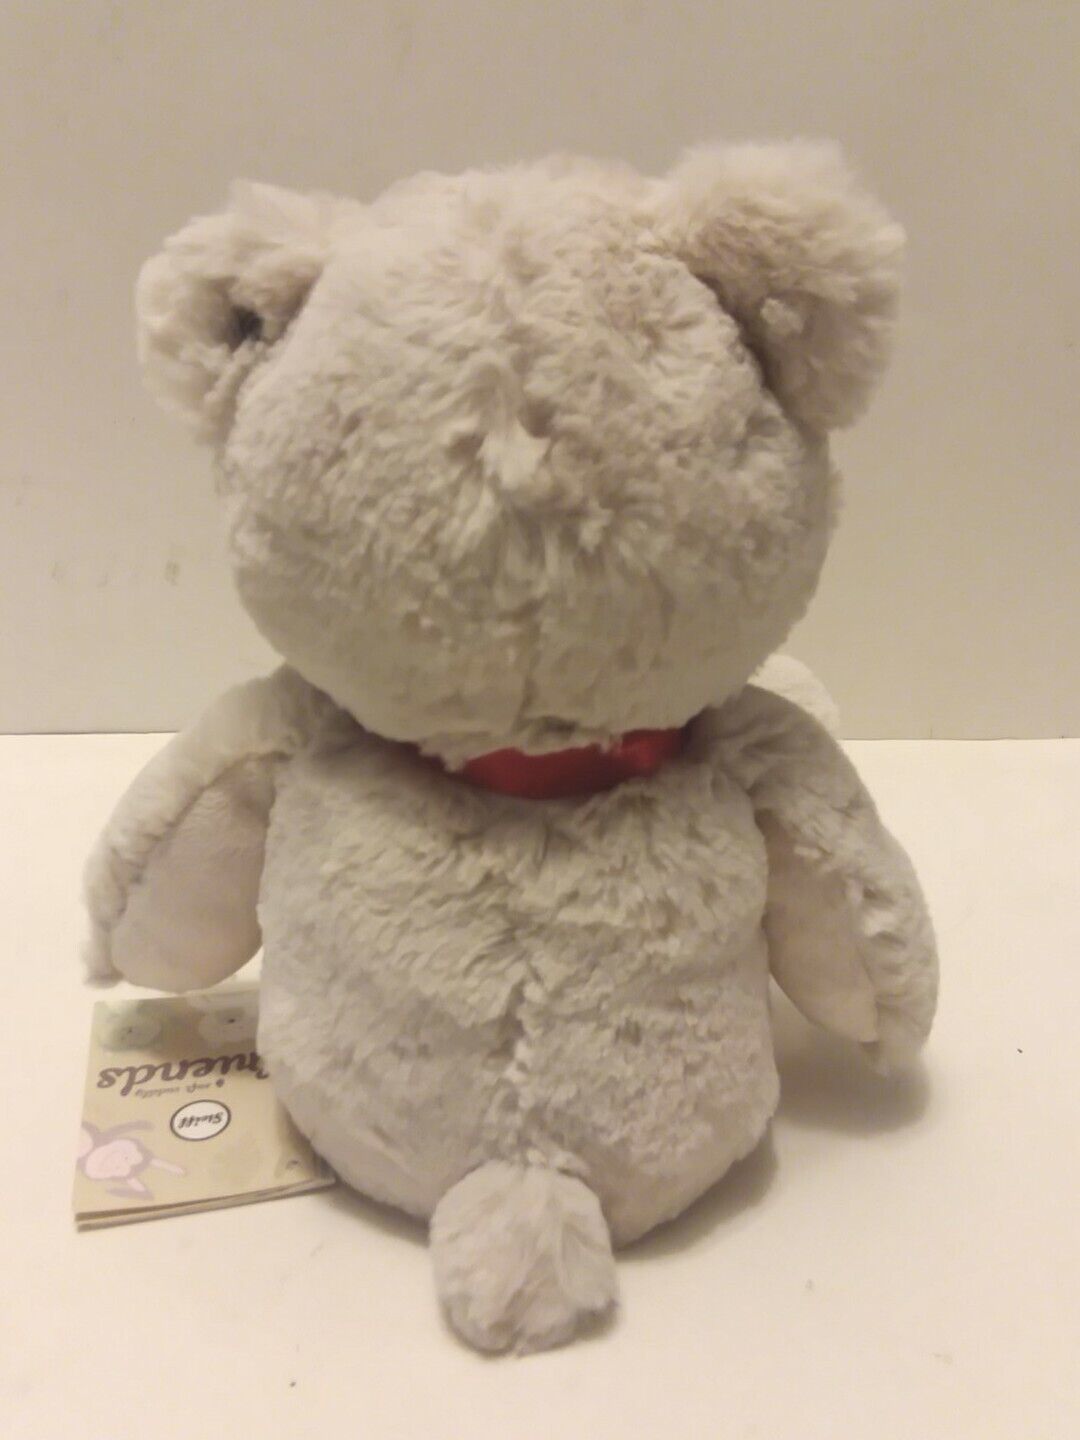 New With Tags Steiff Neiman Marcus Tan the Bear teddy stuffed animal 12” Steiff - фотография #3